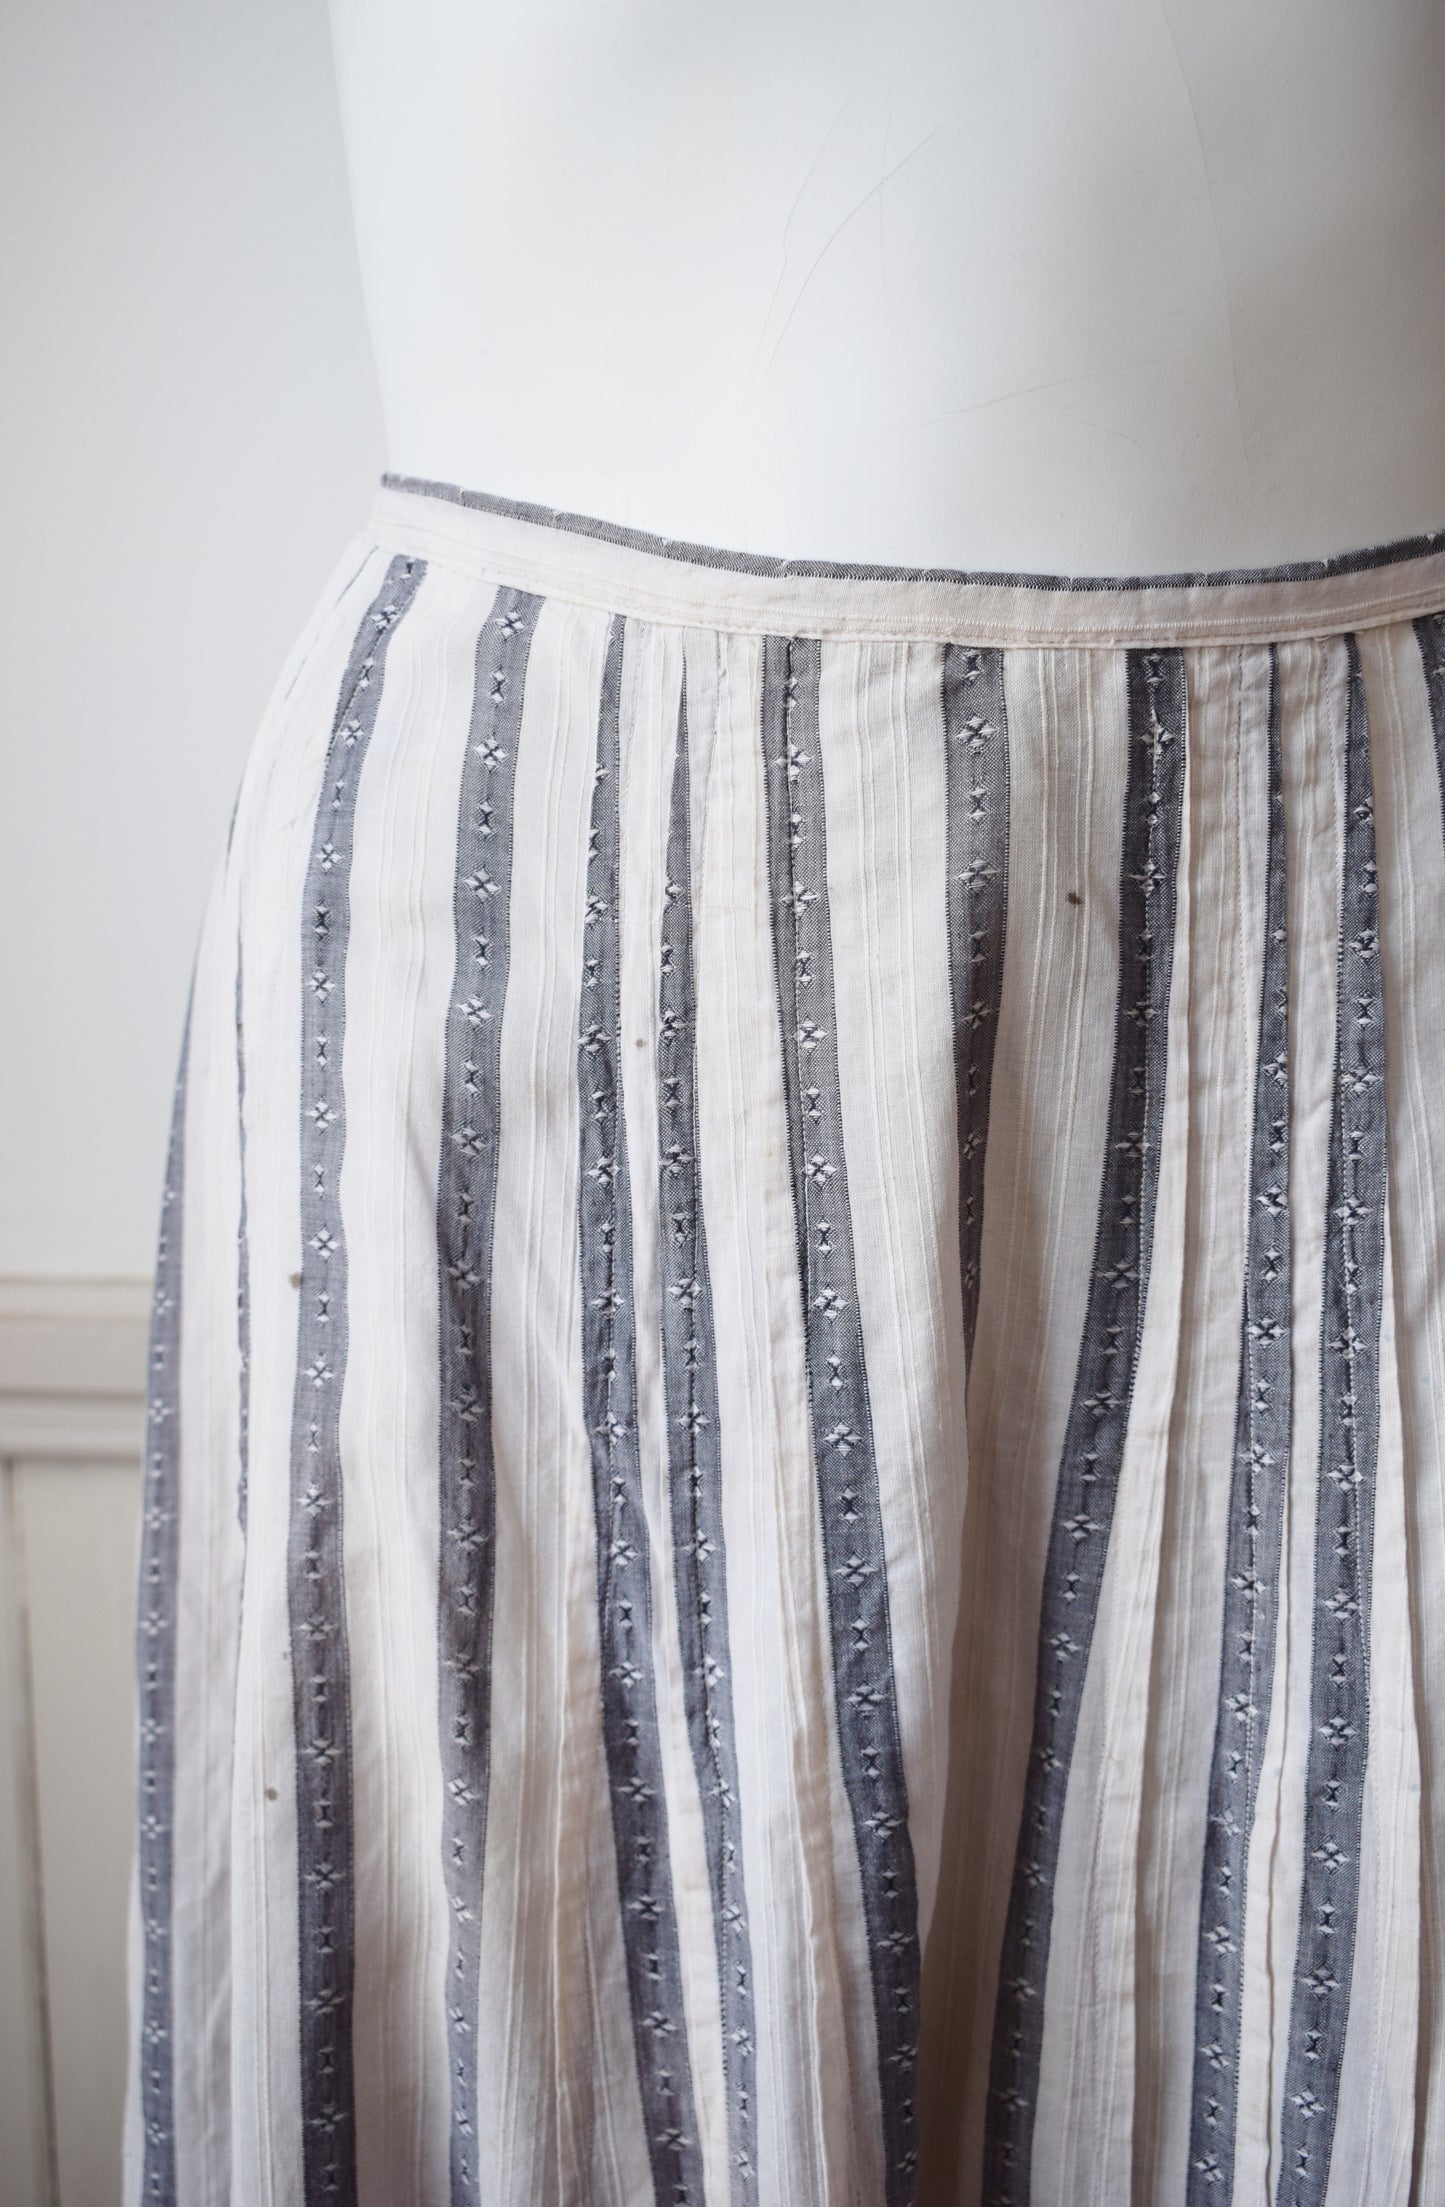 Antique Ticking Stripe Pleated Cotton Skirt | L